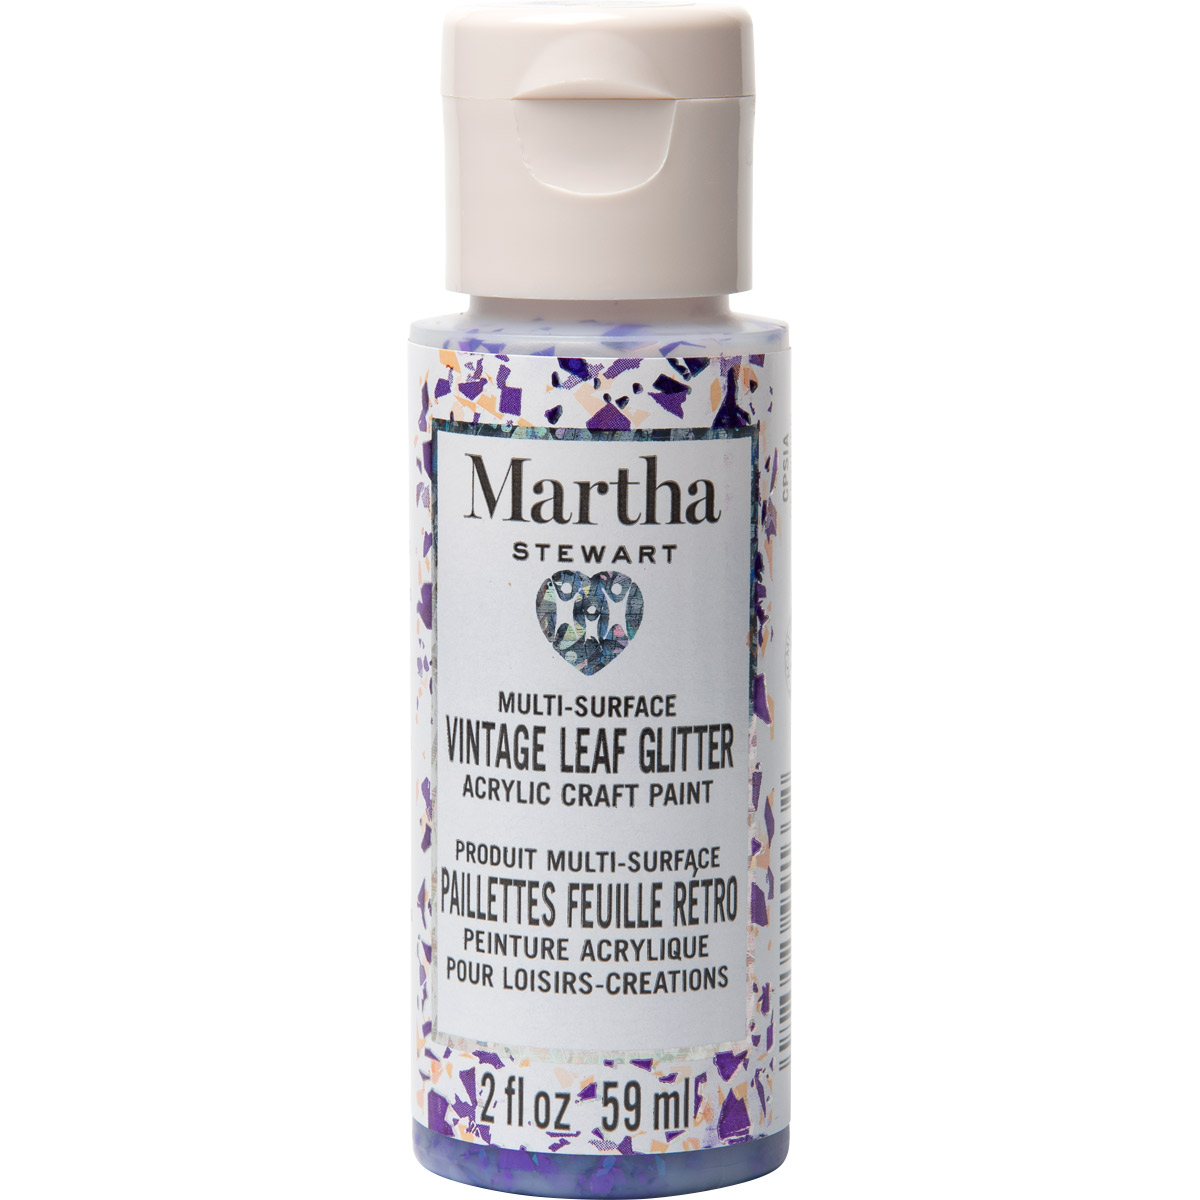 Martha Stewart ® Multi-Surface Vintage Leaf Glitter Acrylic Craft Paint CPSIA - Sugar Plum, 2 oz. - 